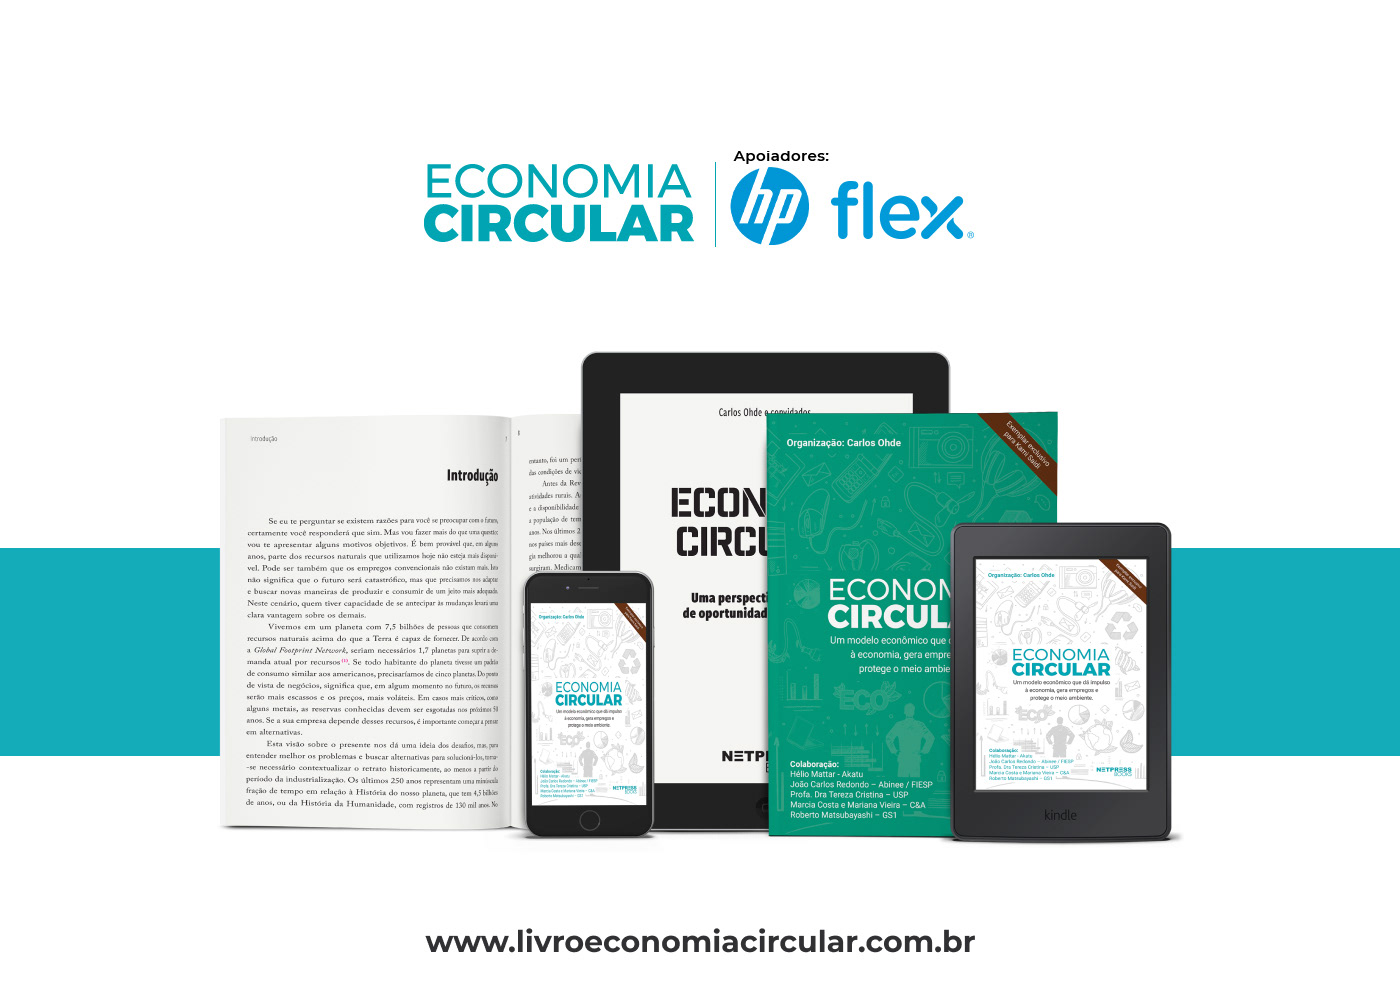 economia circular book wordpress circular economy economy recycle Sustainable e-book carlos ohde